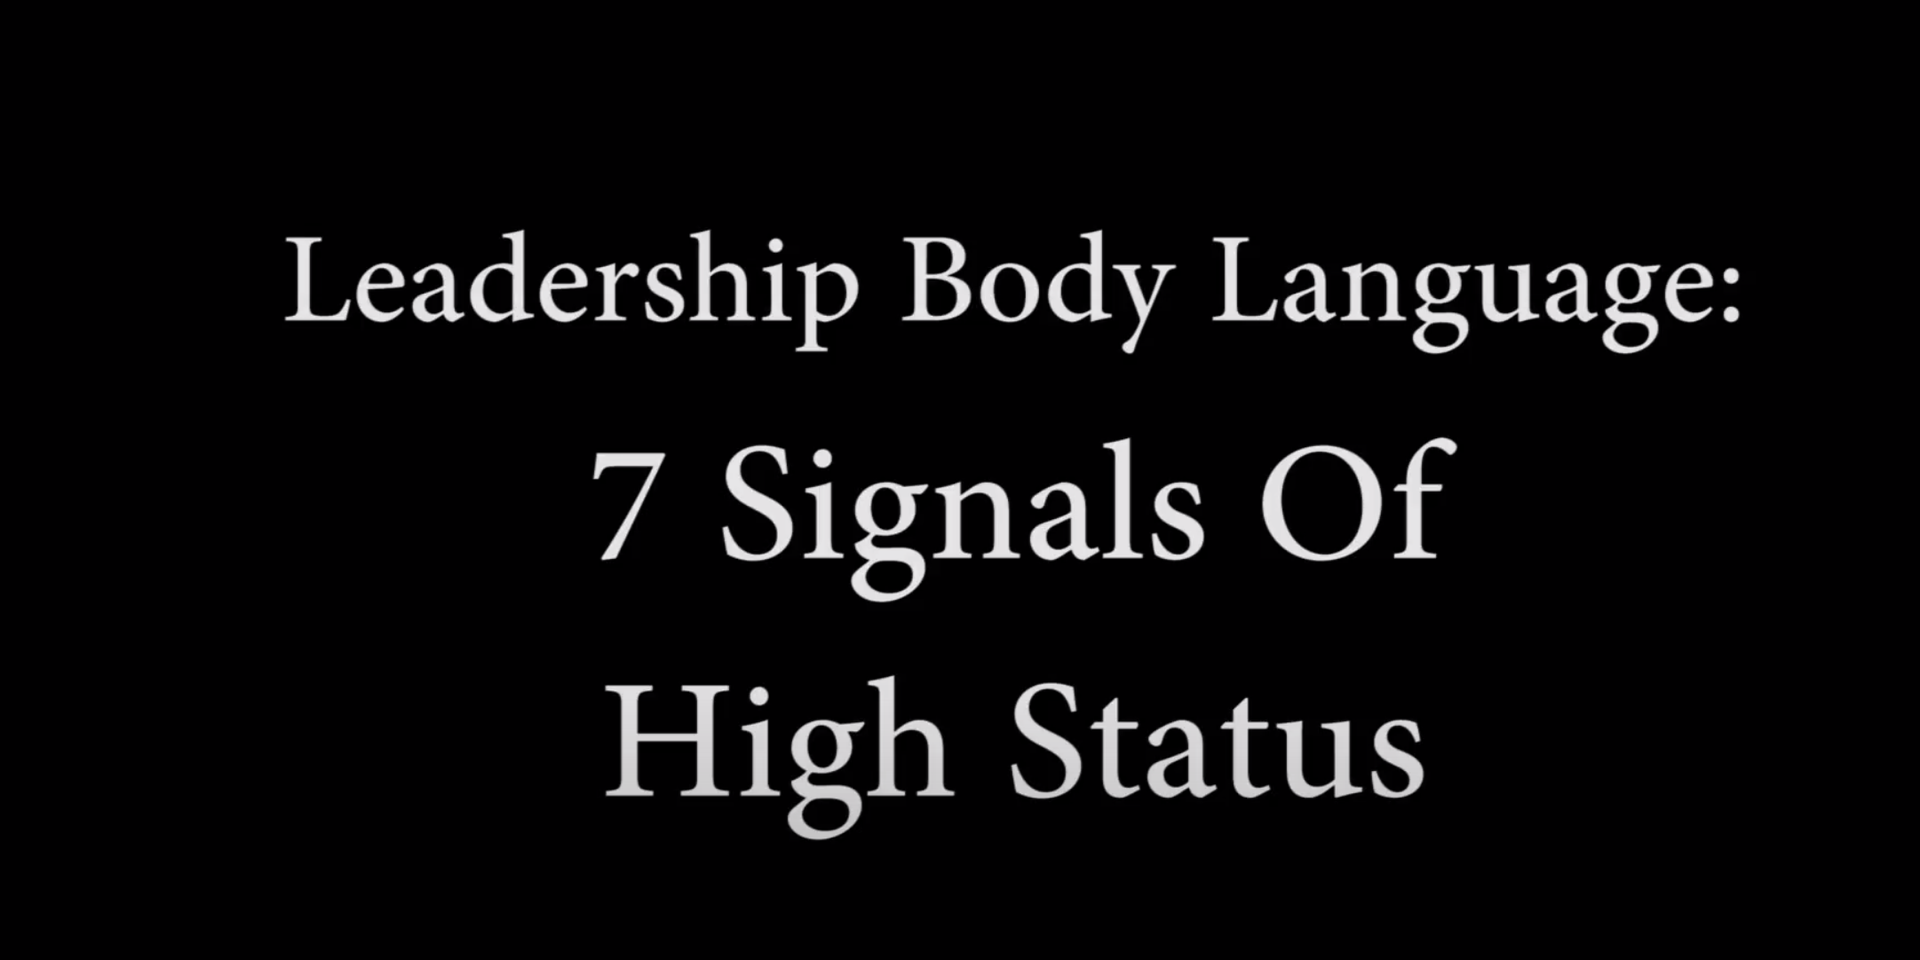 Leadership Body Language: 7 signals of High Status